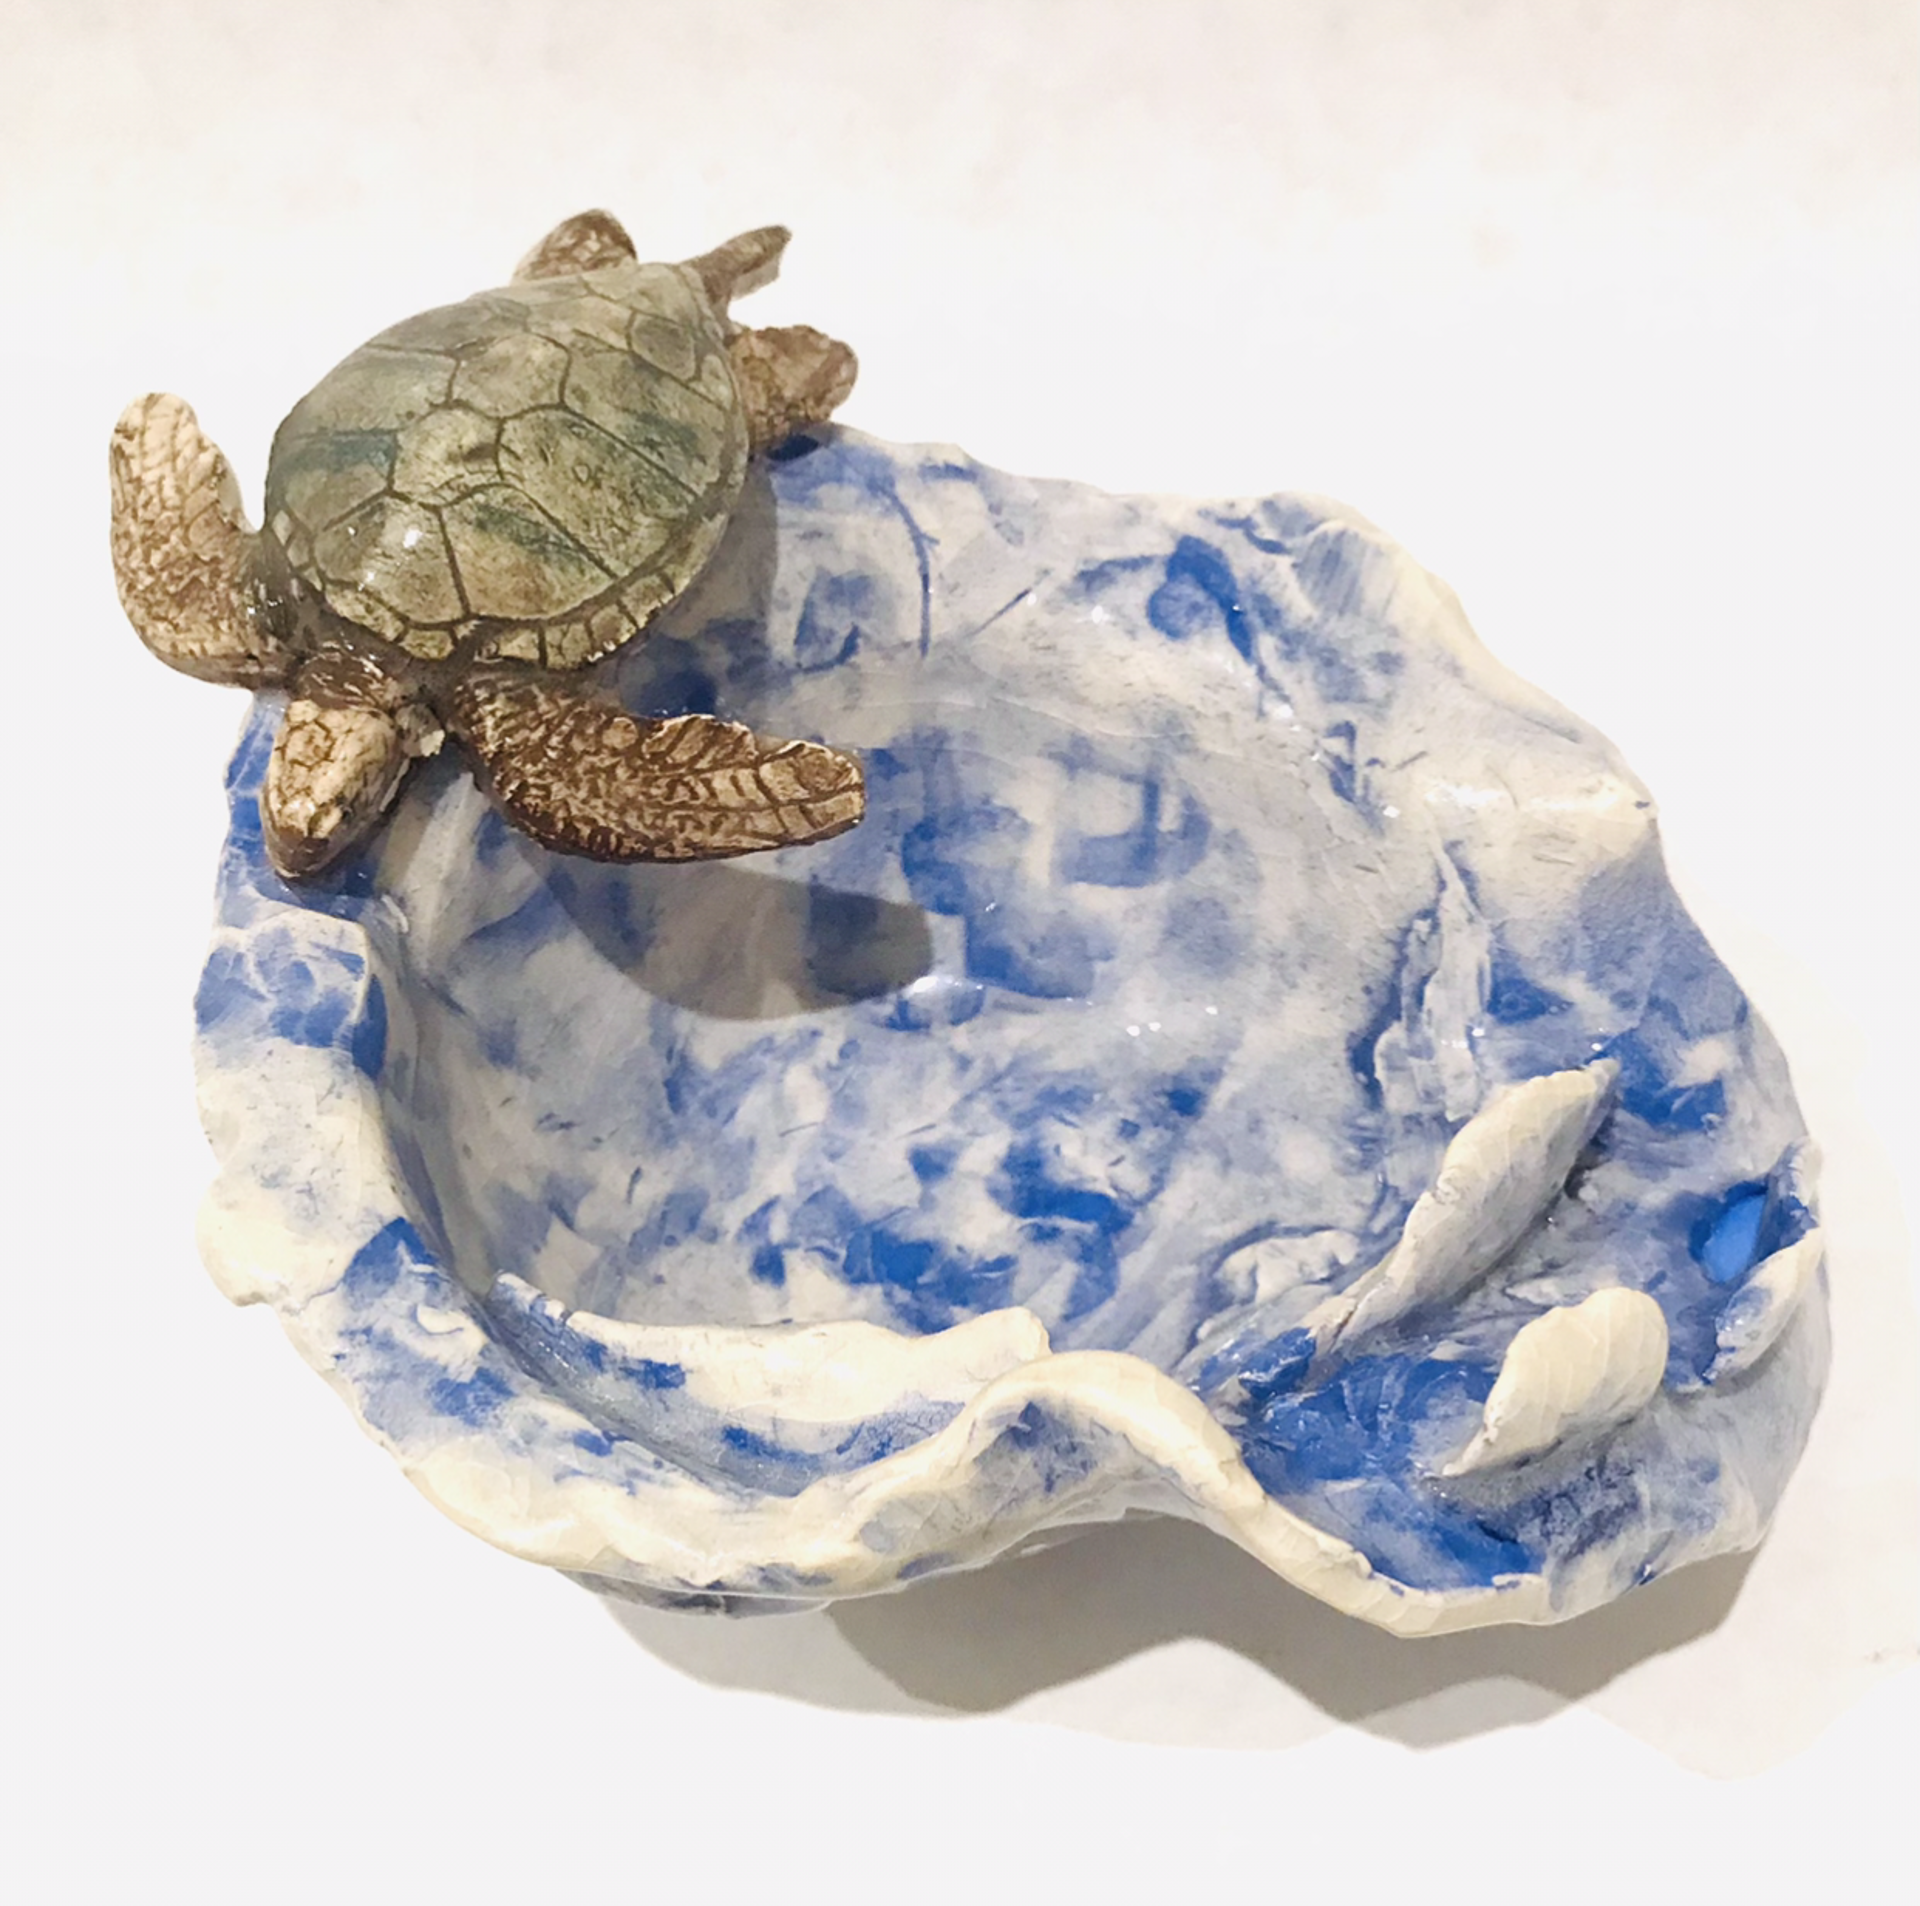 BB22-45 Turtle Riding a Wave Bowl by Barbara Bergwerf, ceramics